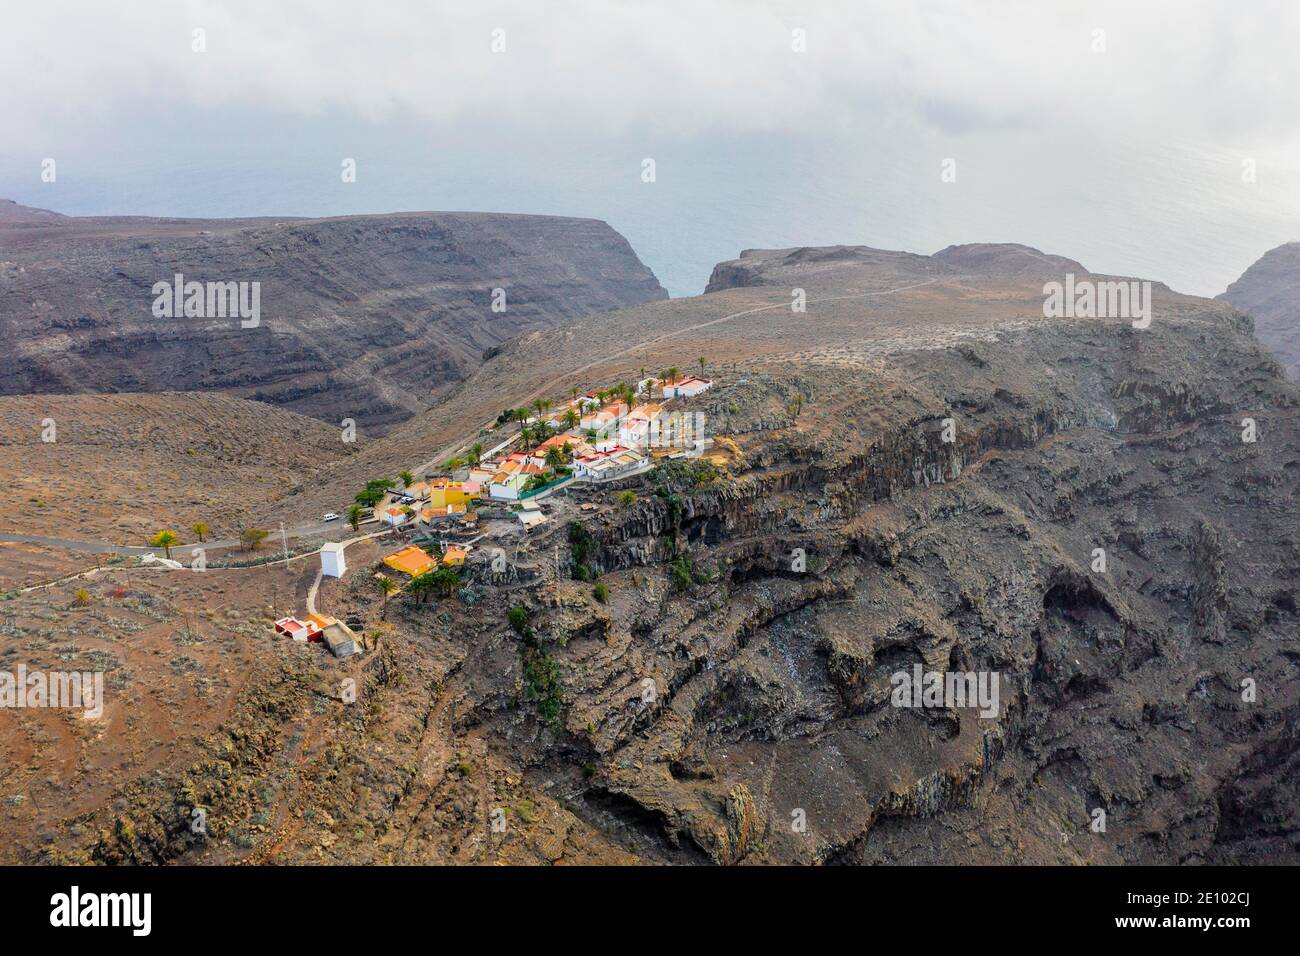 Settlement Arguayoda, Loma de Arguayoda, drone image, La Gomera, Canary Islands, Spain, Europe Stock Photo